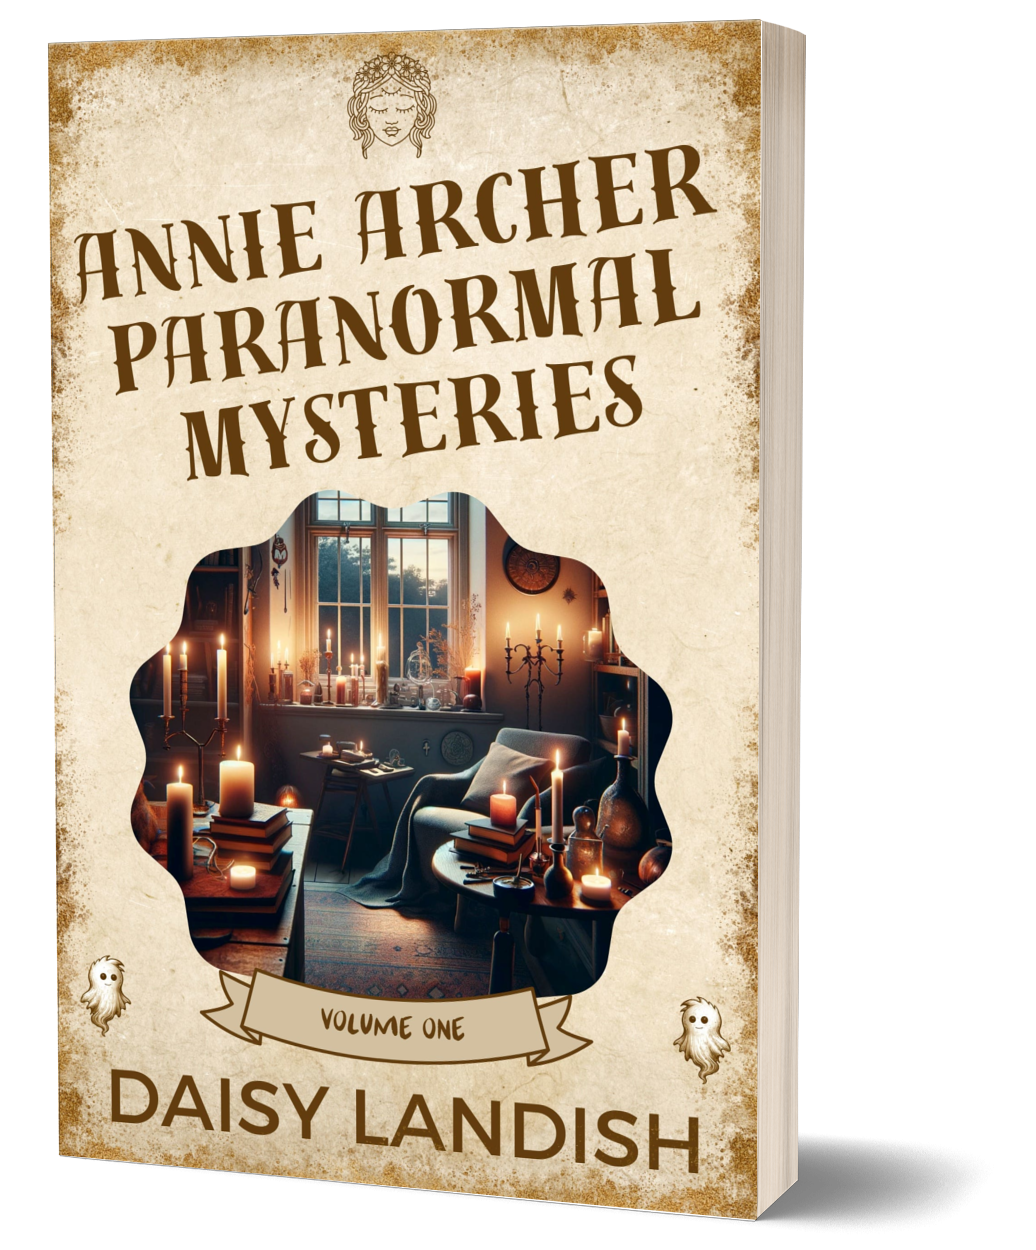 Annie Archer Paranormal Mysteries  - Paperback